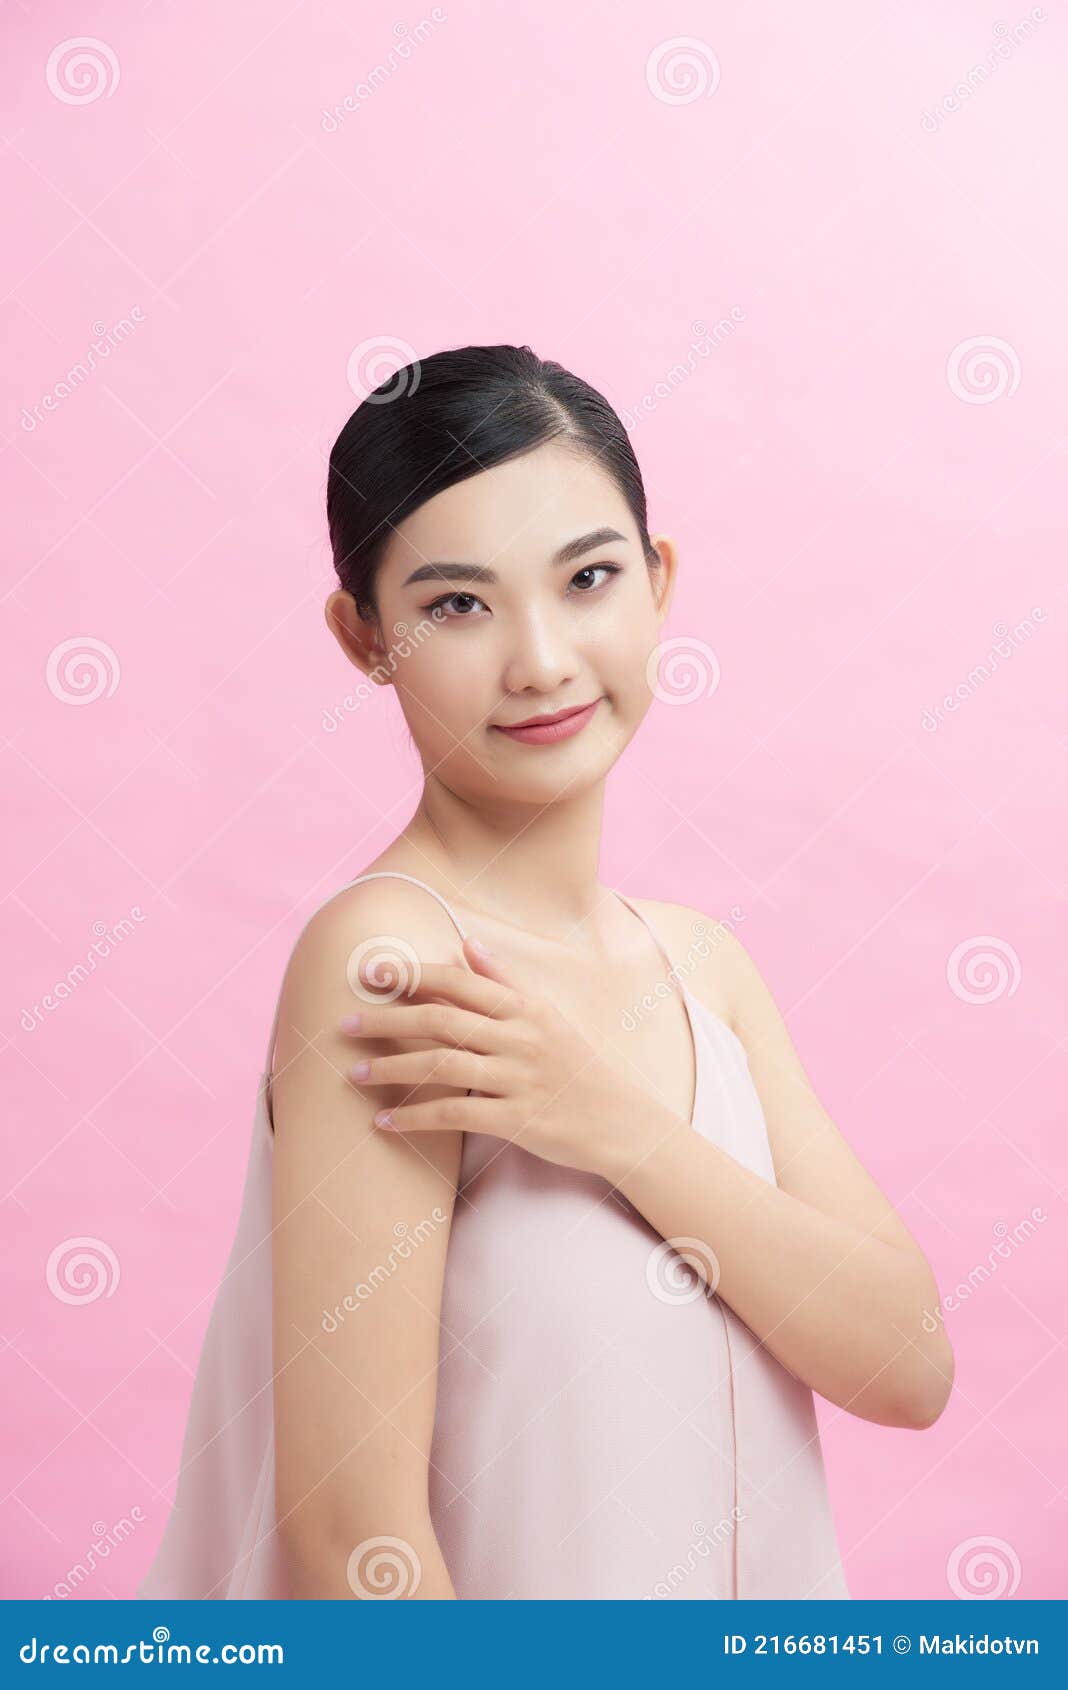 Small Asian Girls Nude